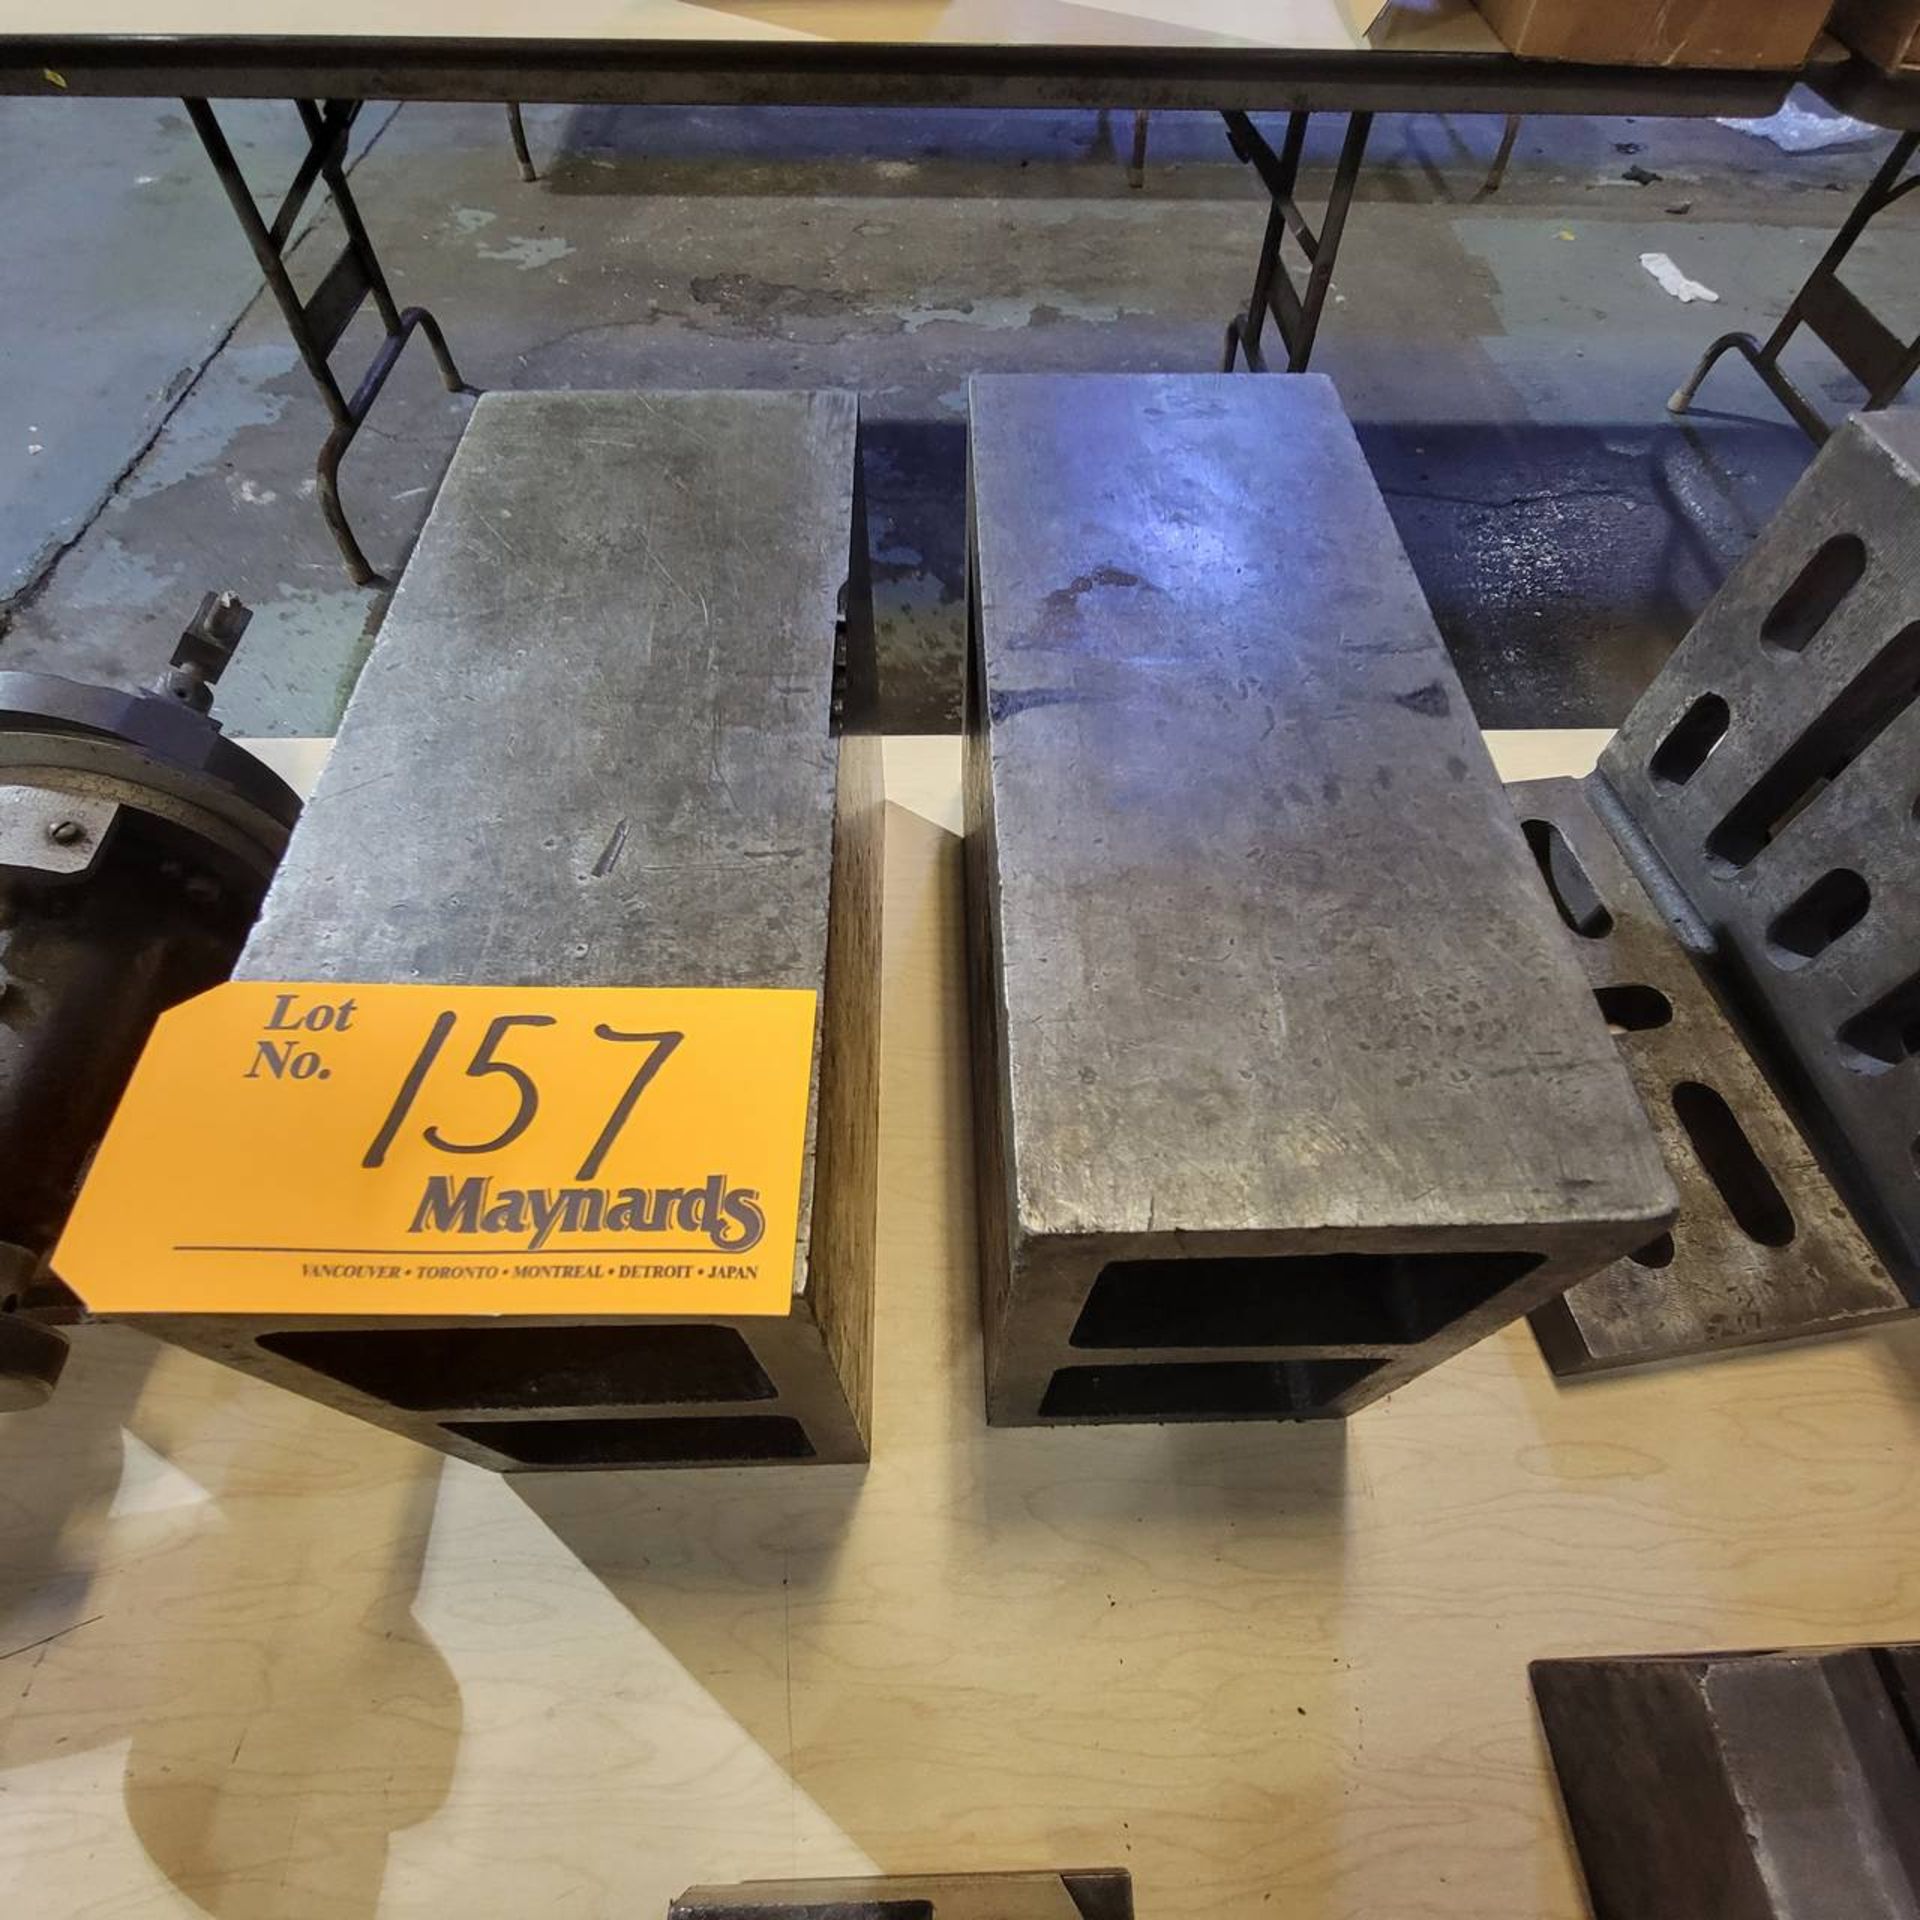 Pair of 5" x 8" x 12" steel set up blocks